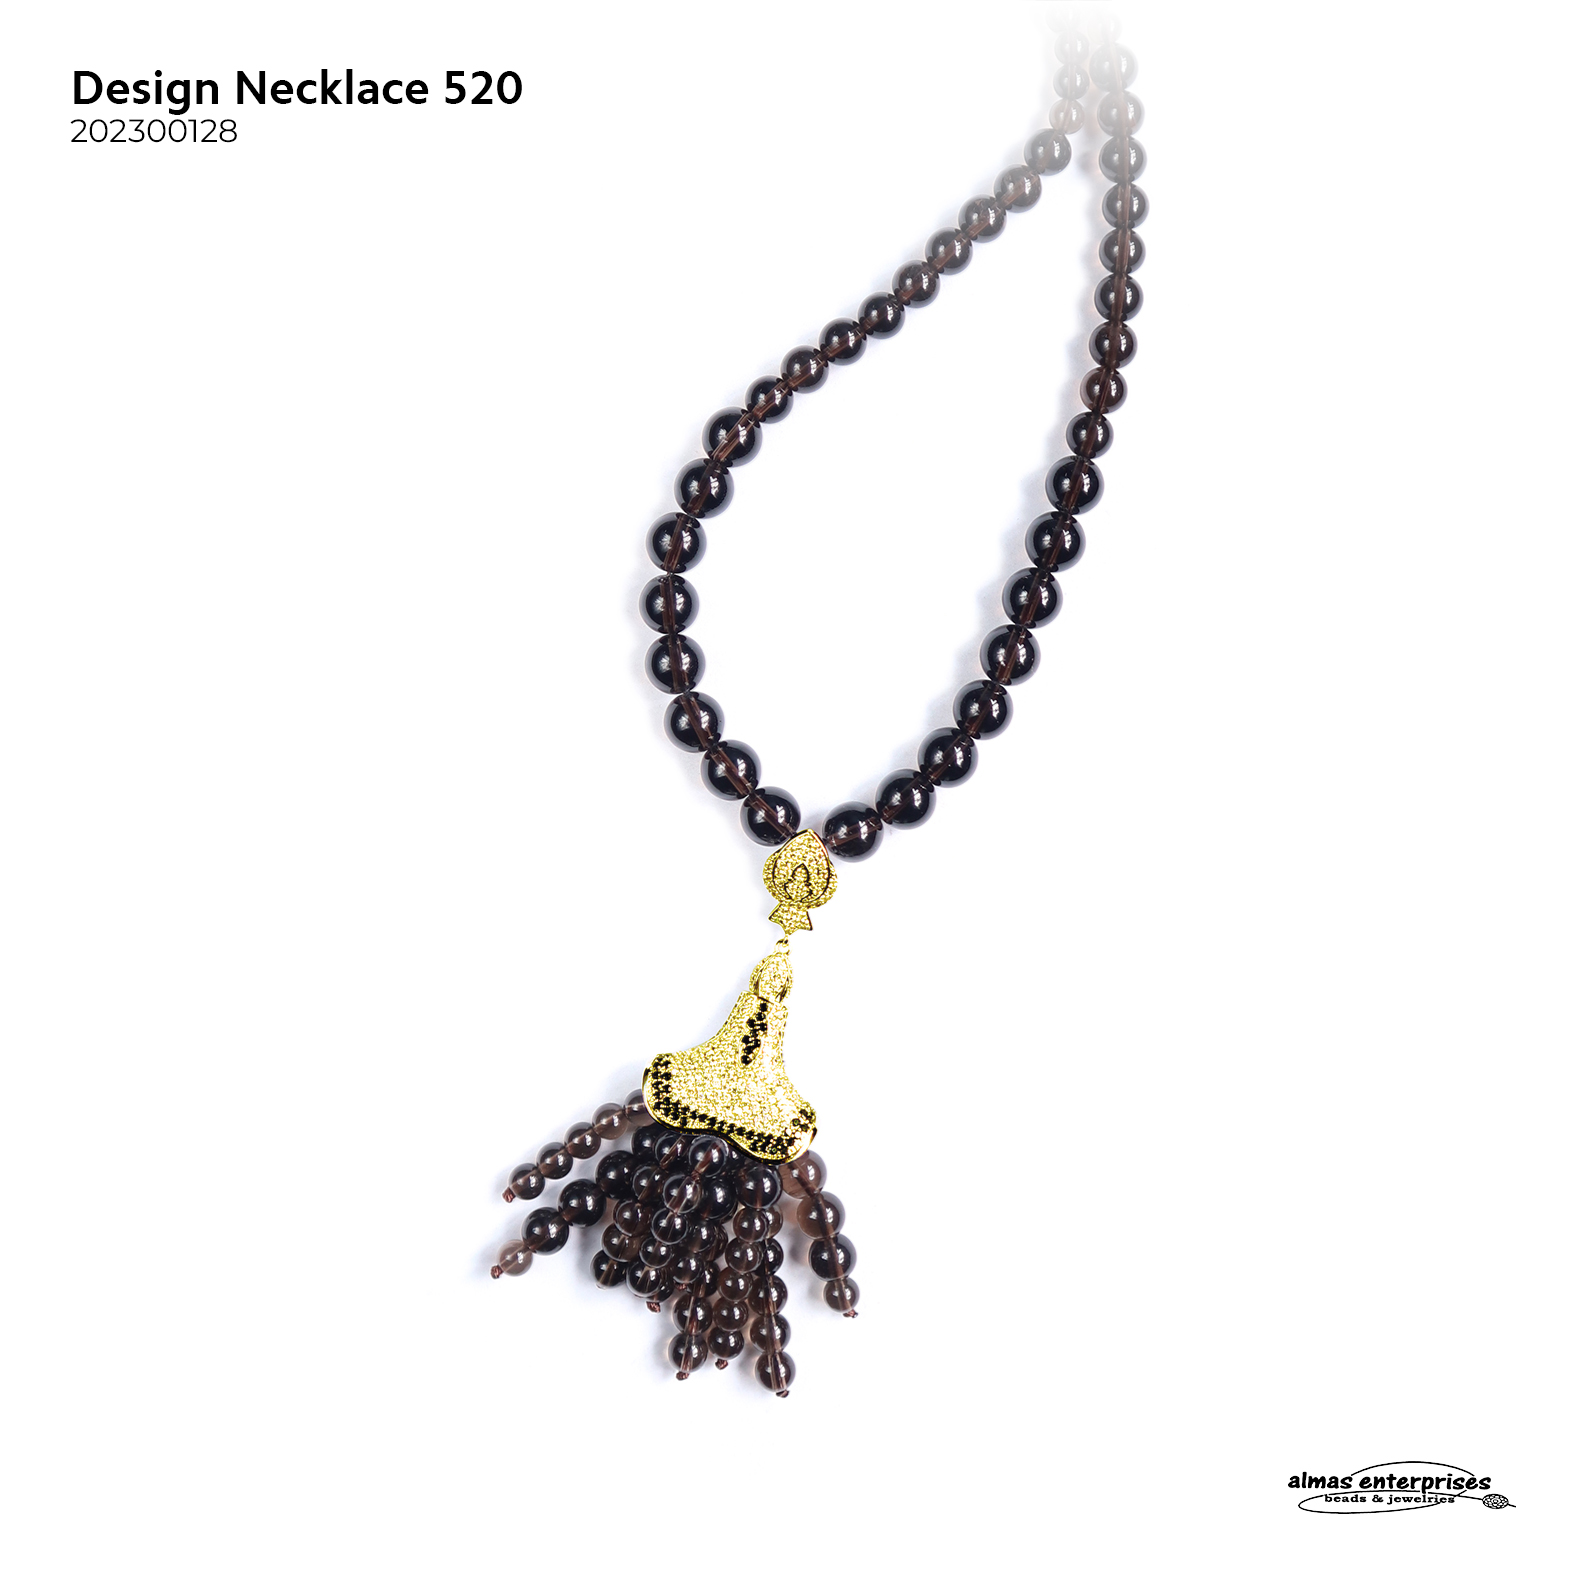 Design Necklace 520